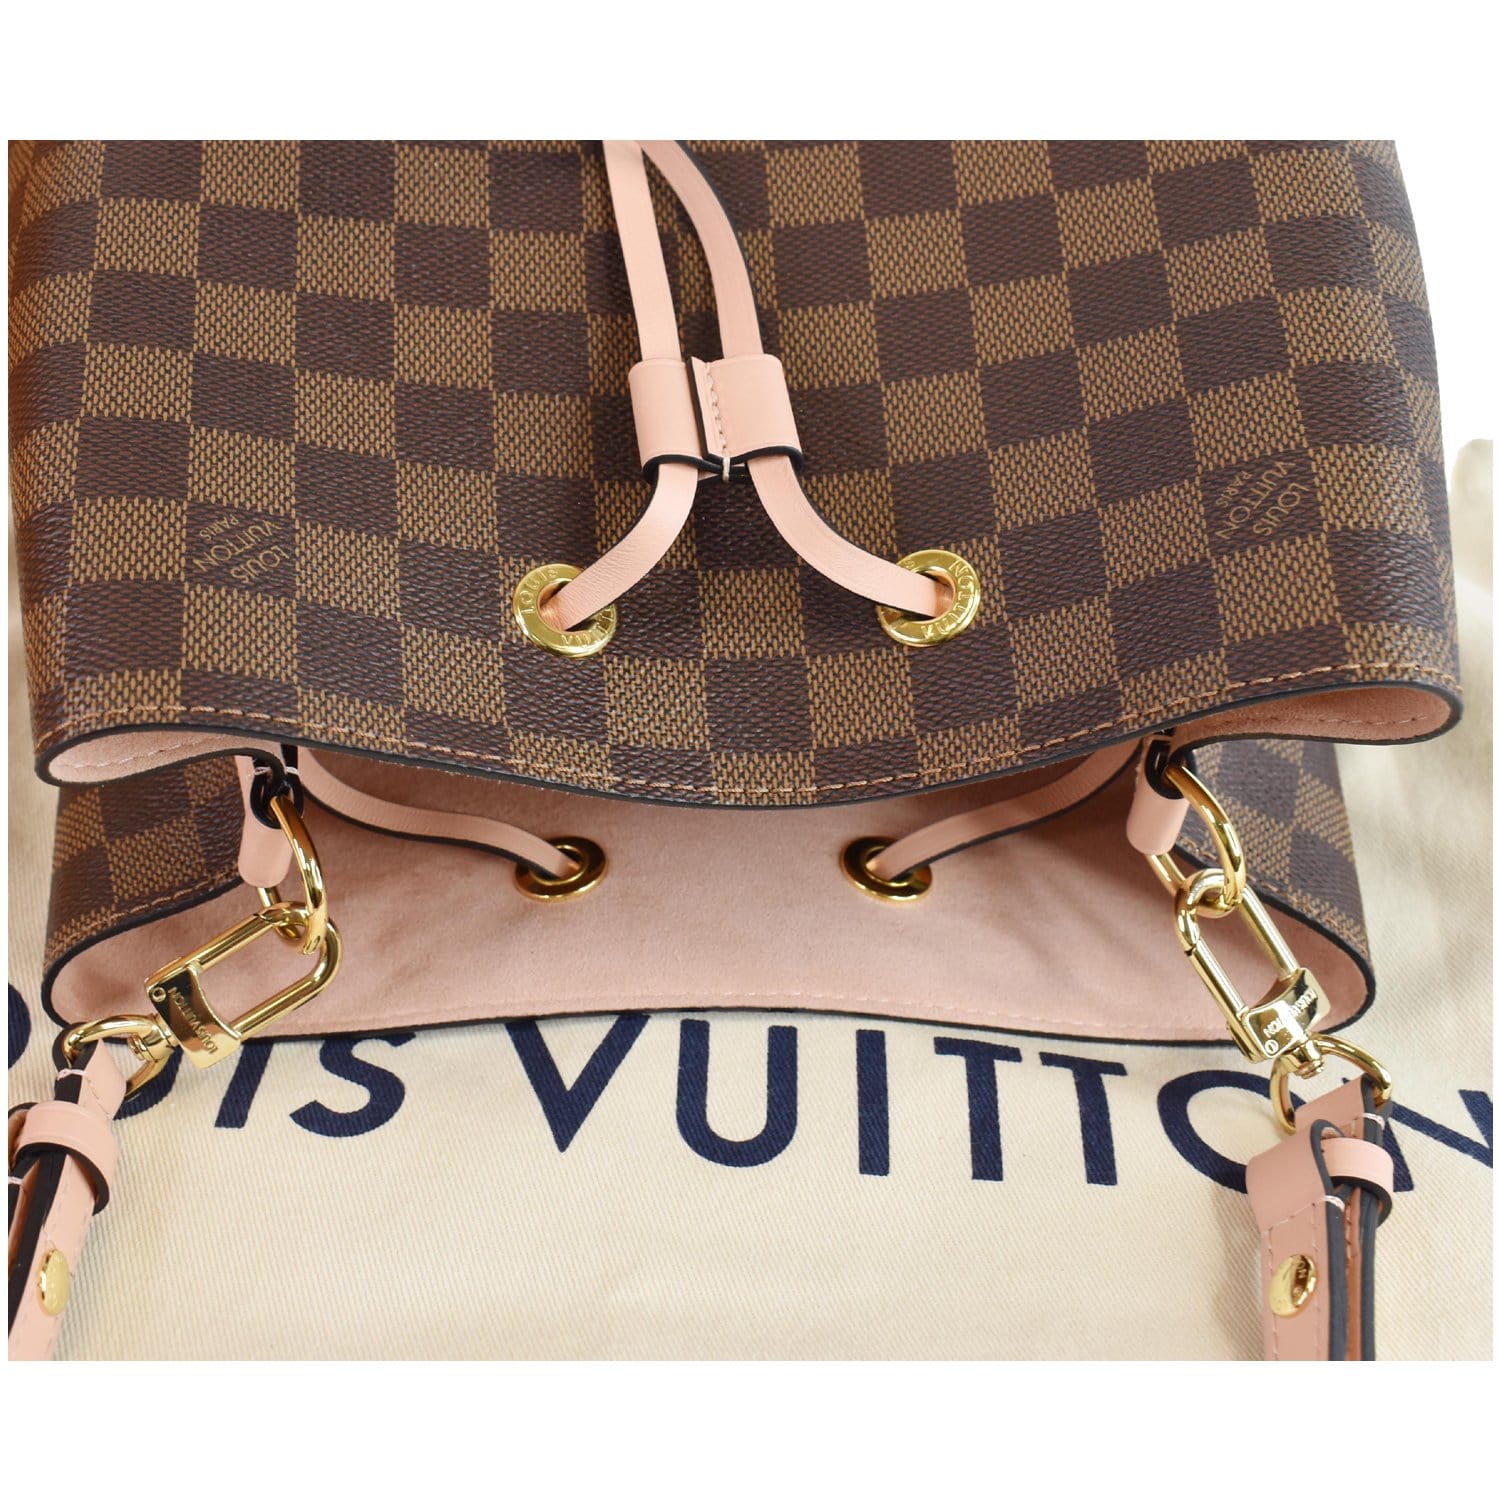 LV neon vibes  Bags, Bags designer, Vuitton bag